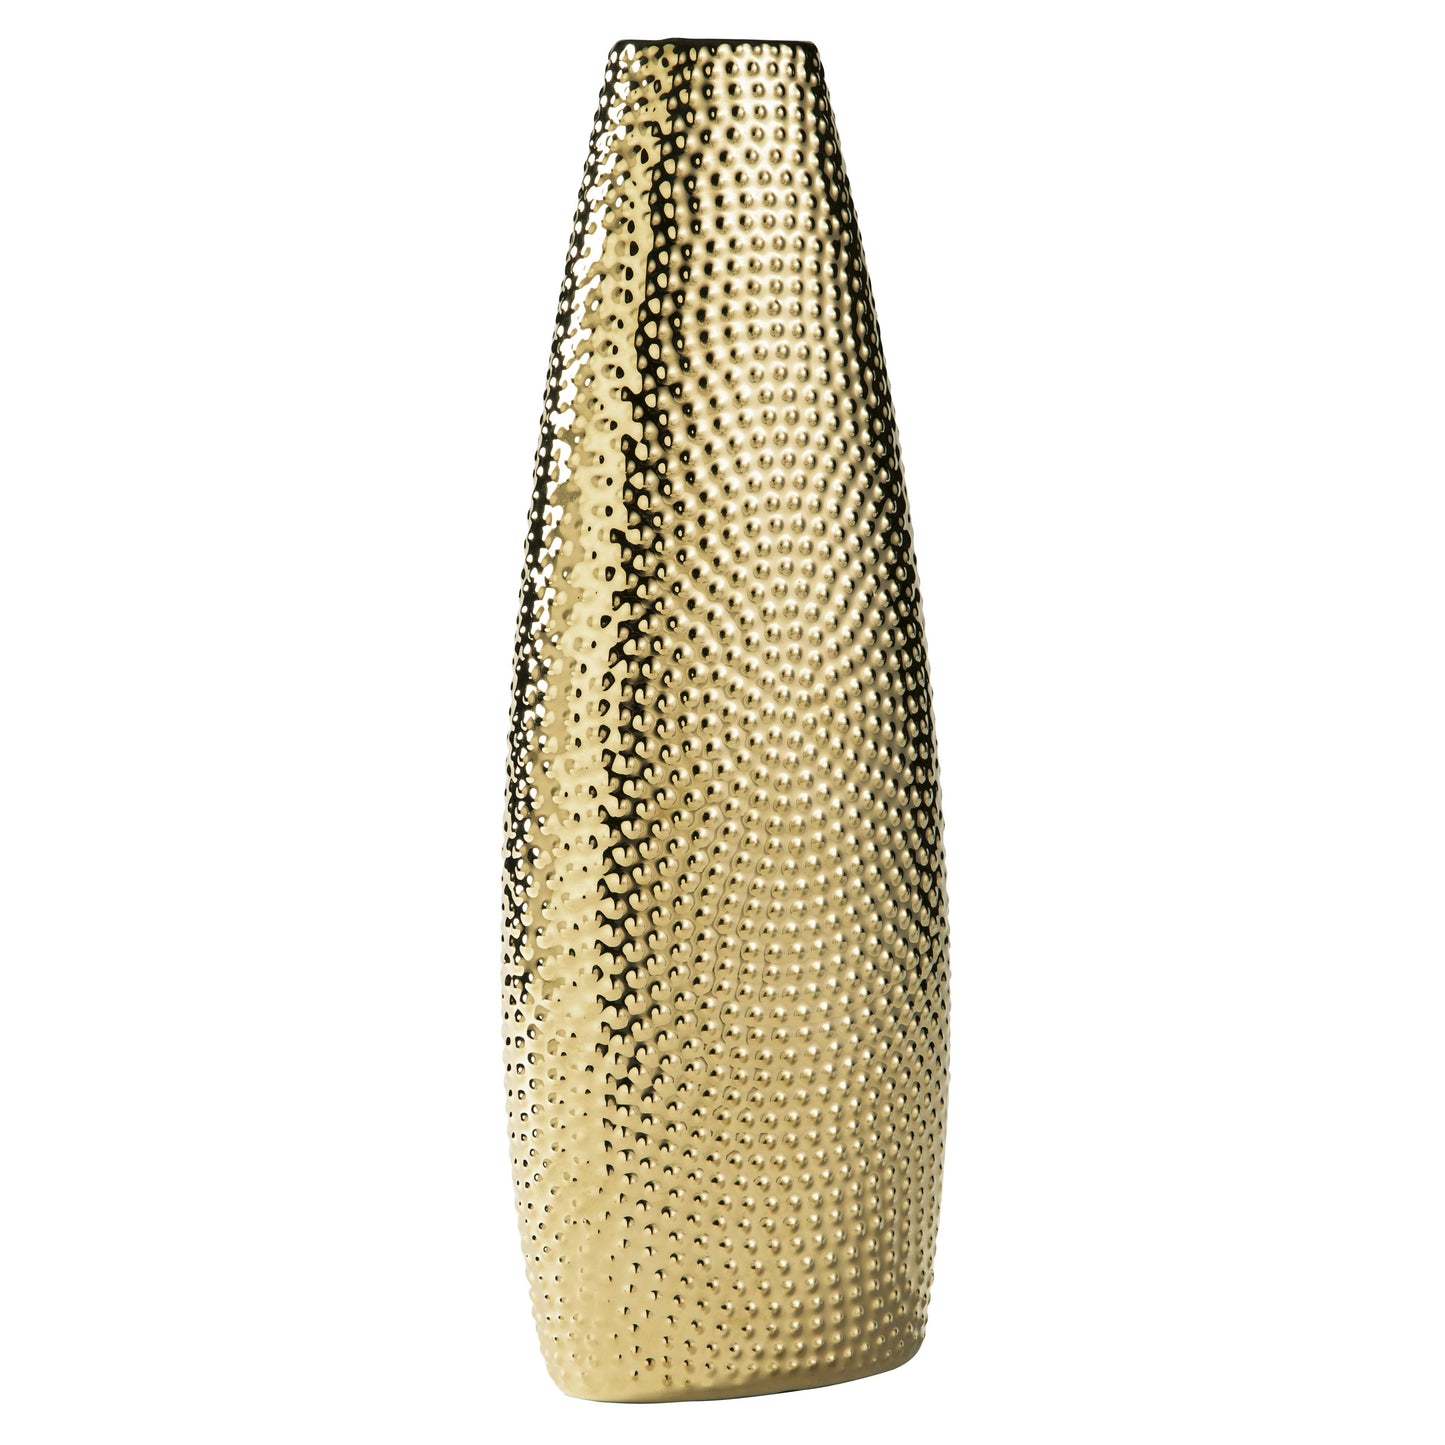 Signature Design by Ashley Home Decor Vases & Bowls A2000576 IMAGE 2